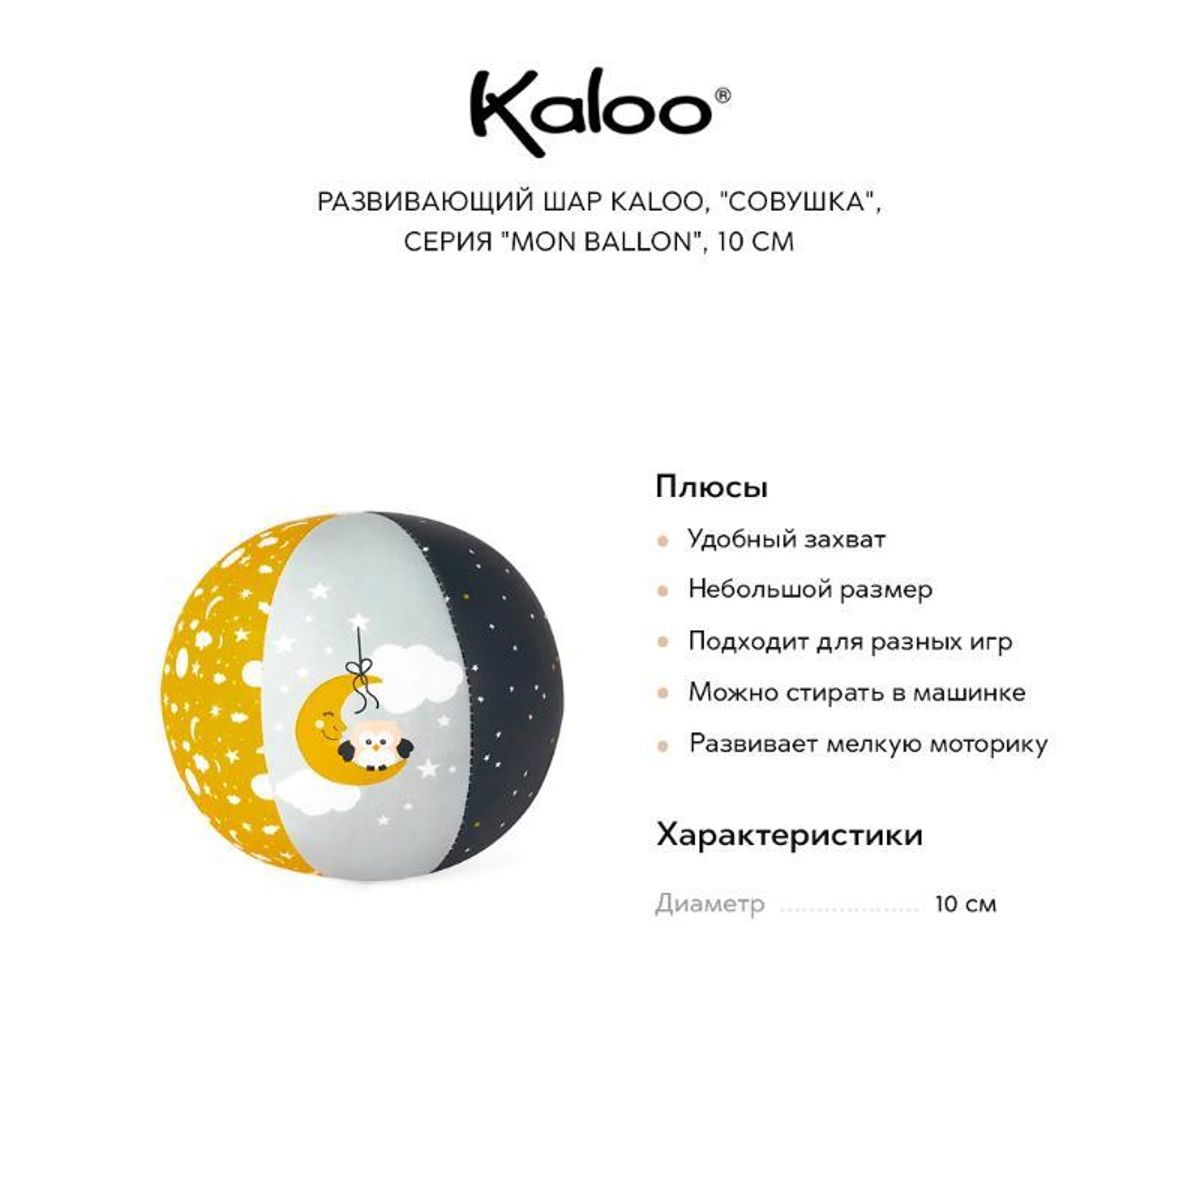 Развивающий шар Kaloo "Совушка", серия "Mon Ballon", 10 см